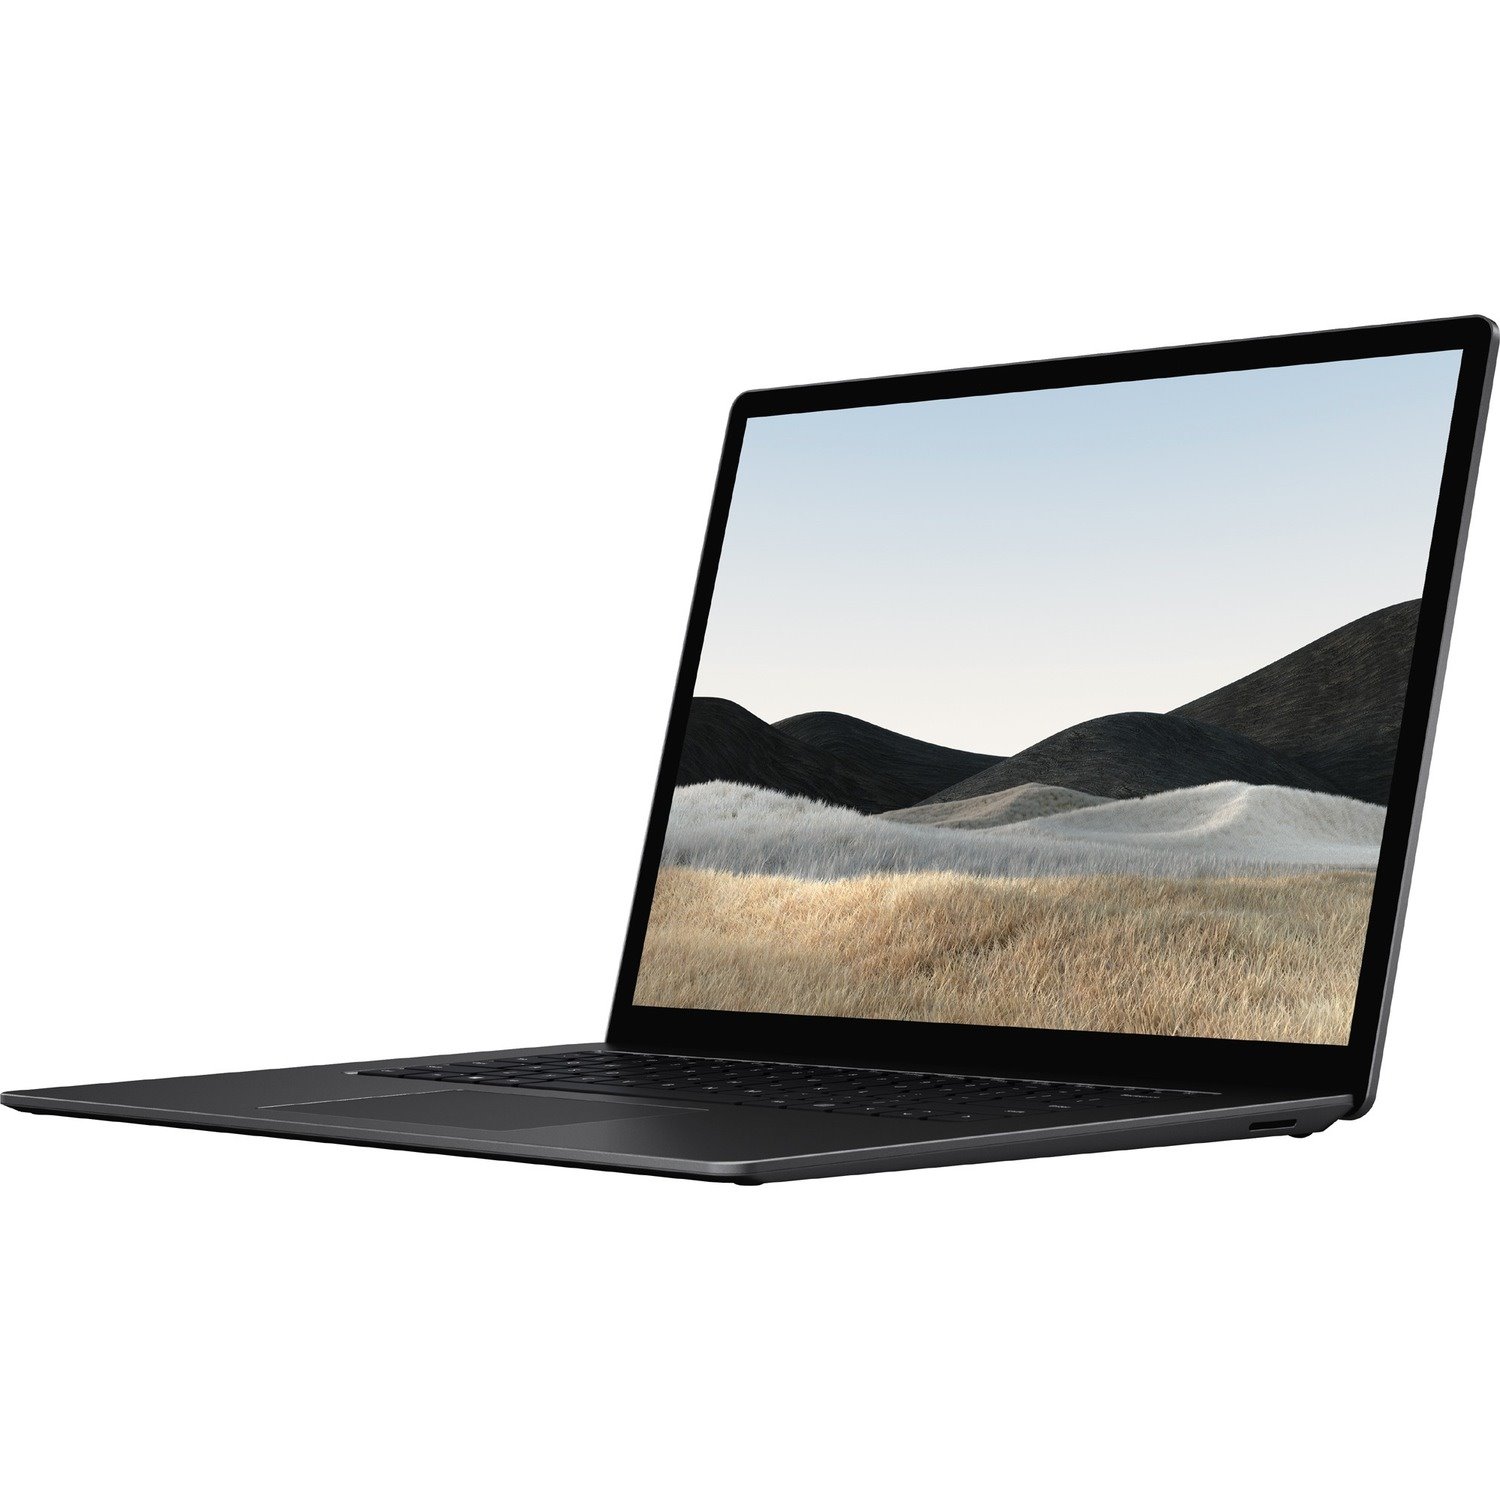 Microsoft Surface Laptop 4 38.1 cm (15") Touchscreen Notebook - 2496 x 1664 - Intel Core i7 - 32 GB Total RAM - 1 TB SSD - Matte Black